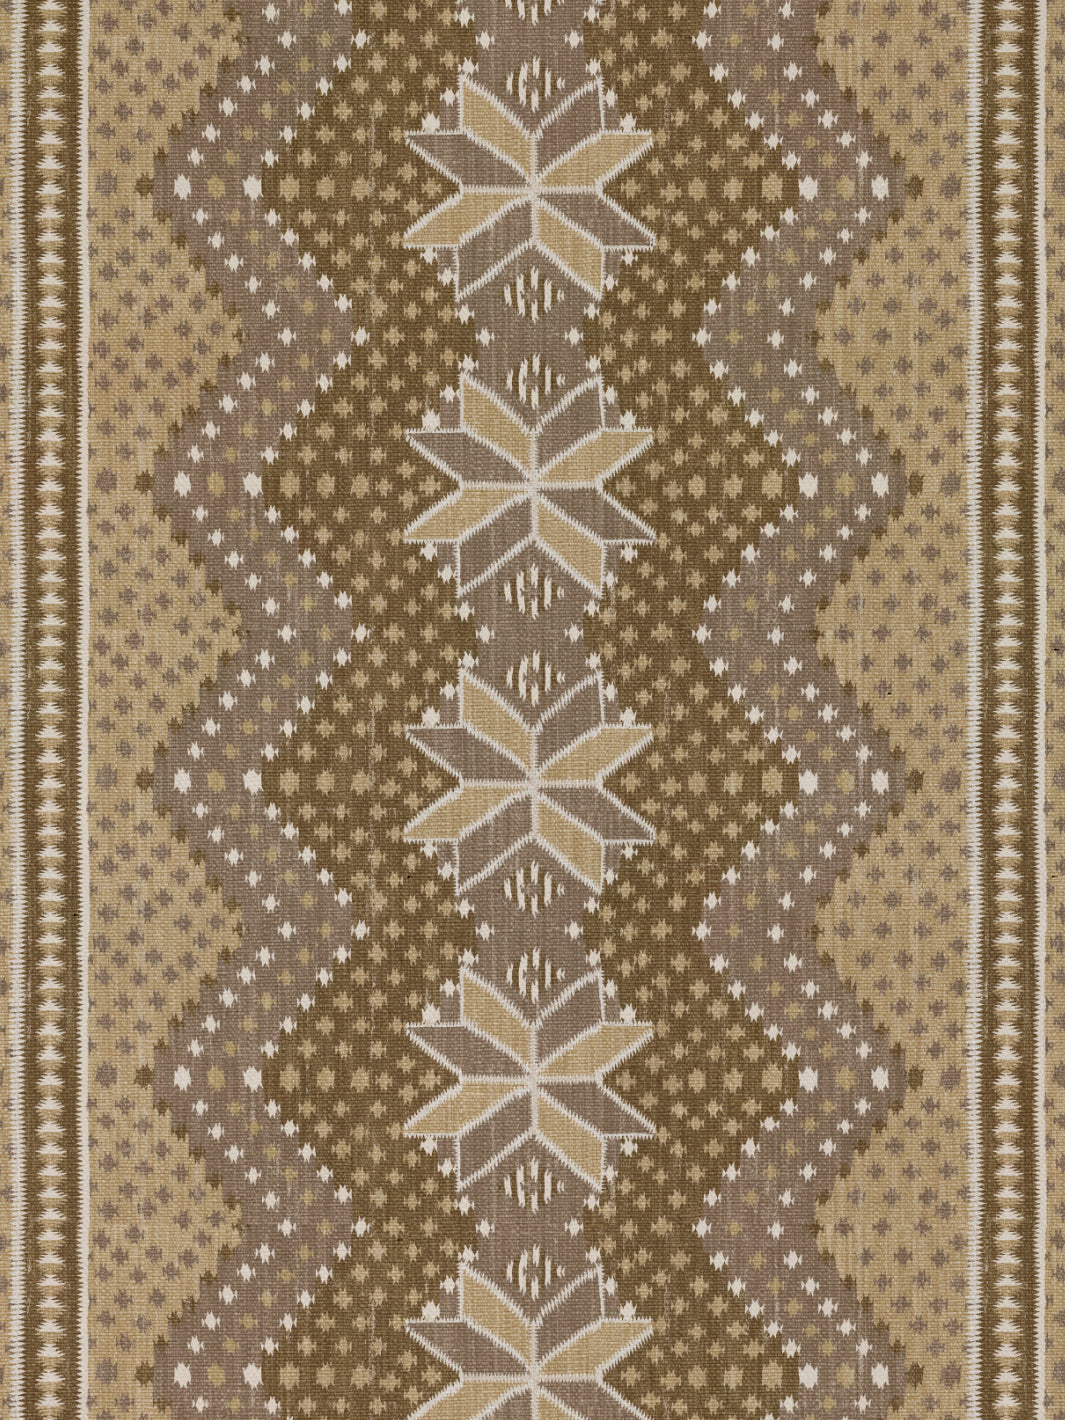 'Northstar Blanket' Linen Fabric by Nathan Turner - Mustard